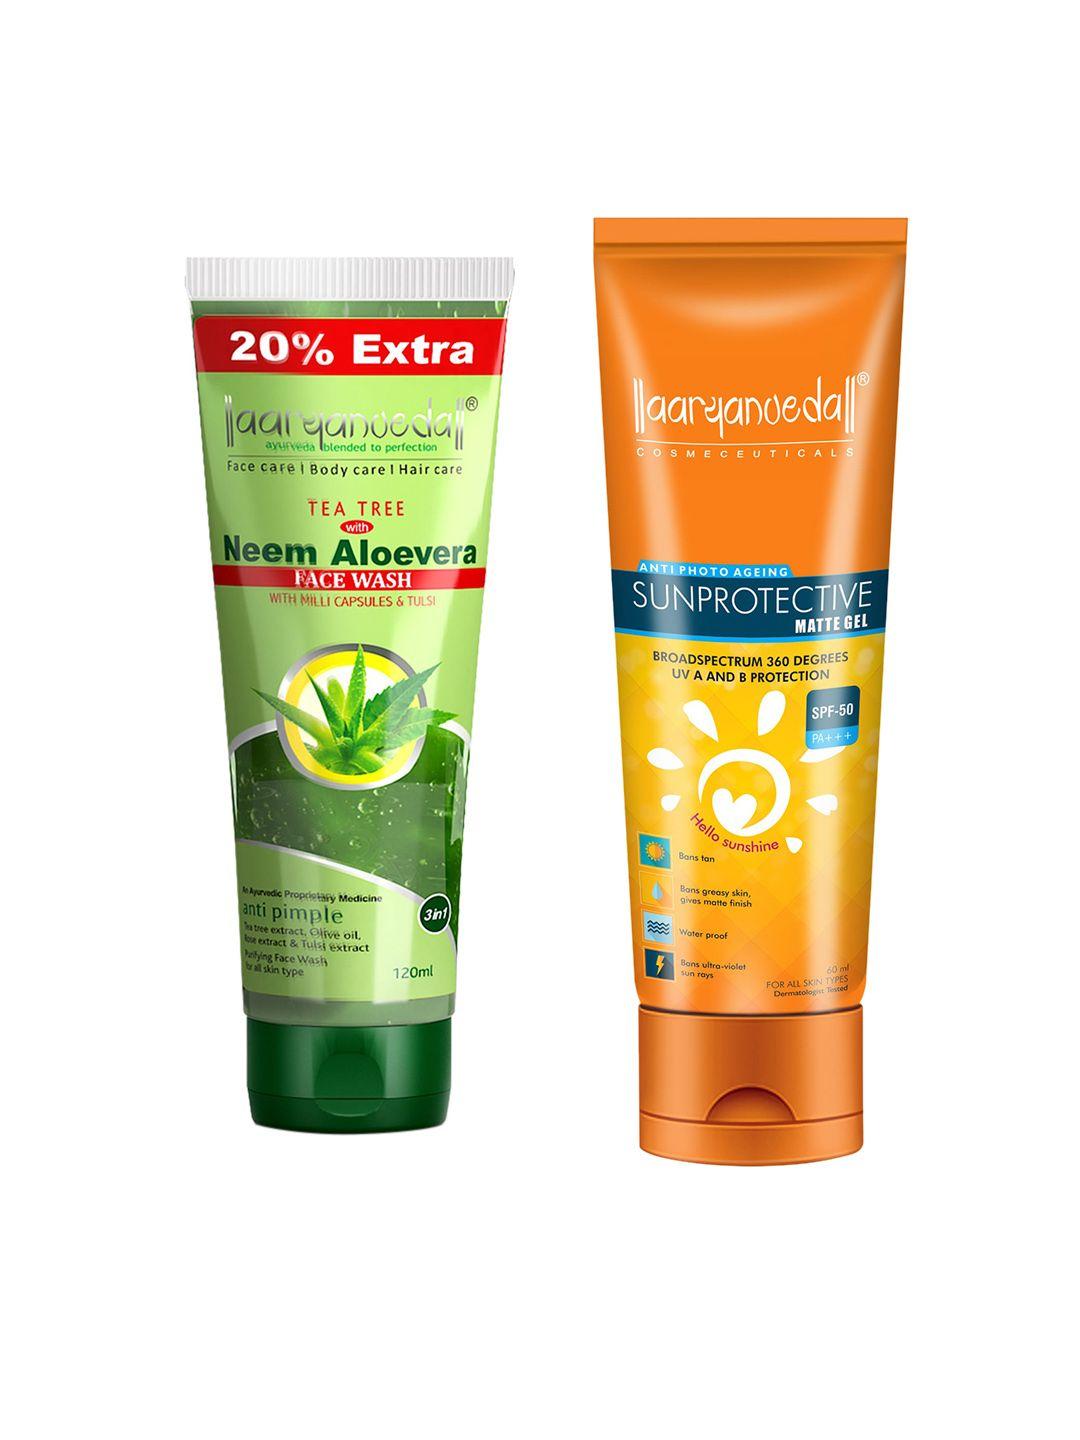 aryanveda tea tree face wash neem & aloe vera extracts, 120ml & sunscreen lotion spf 50, - 60g